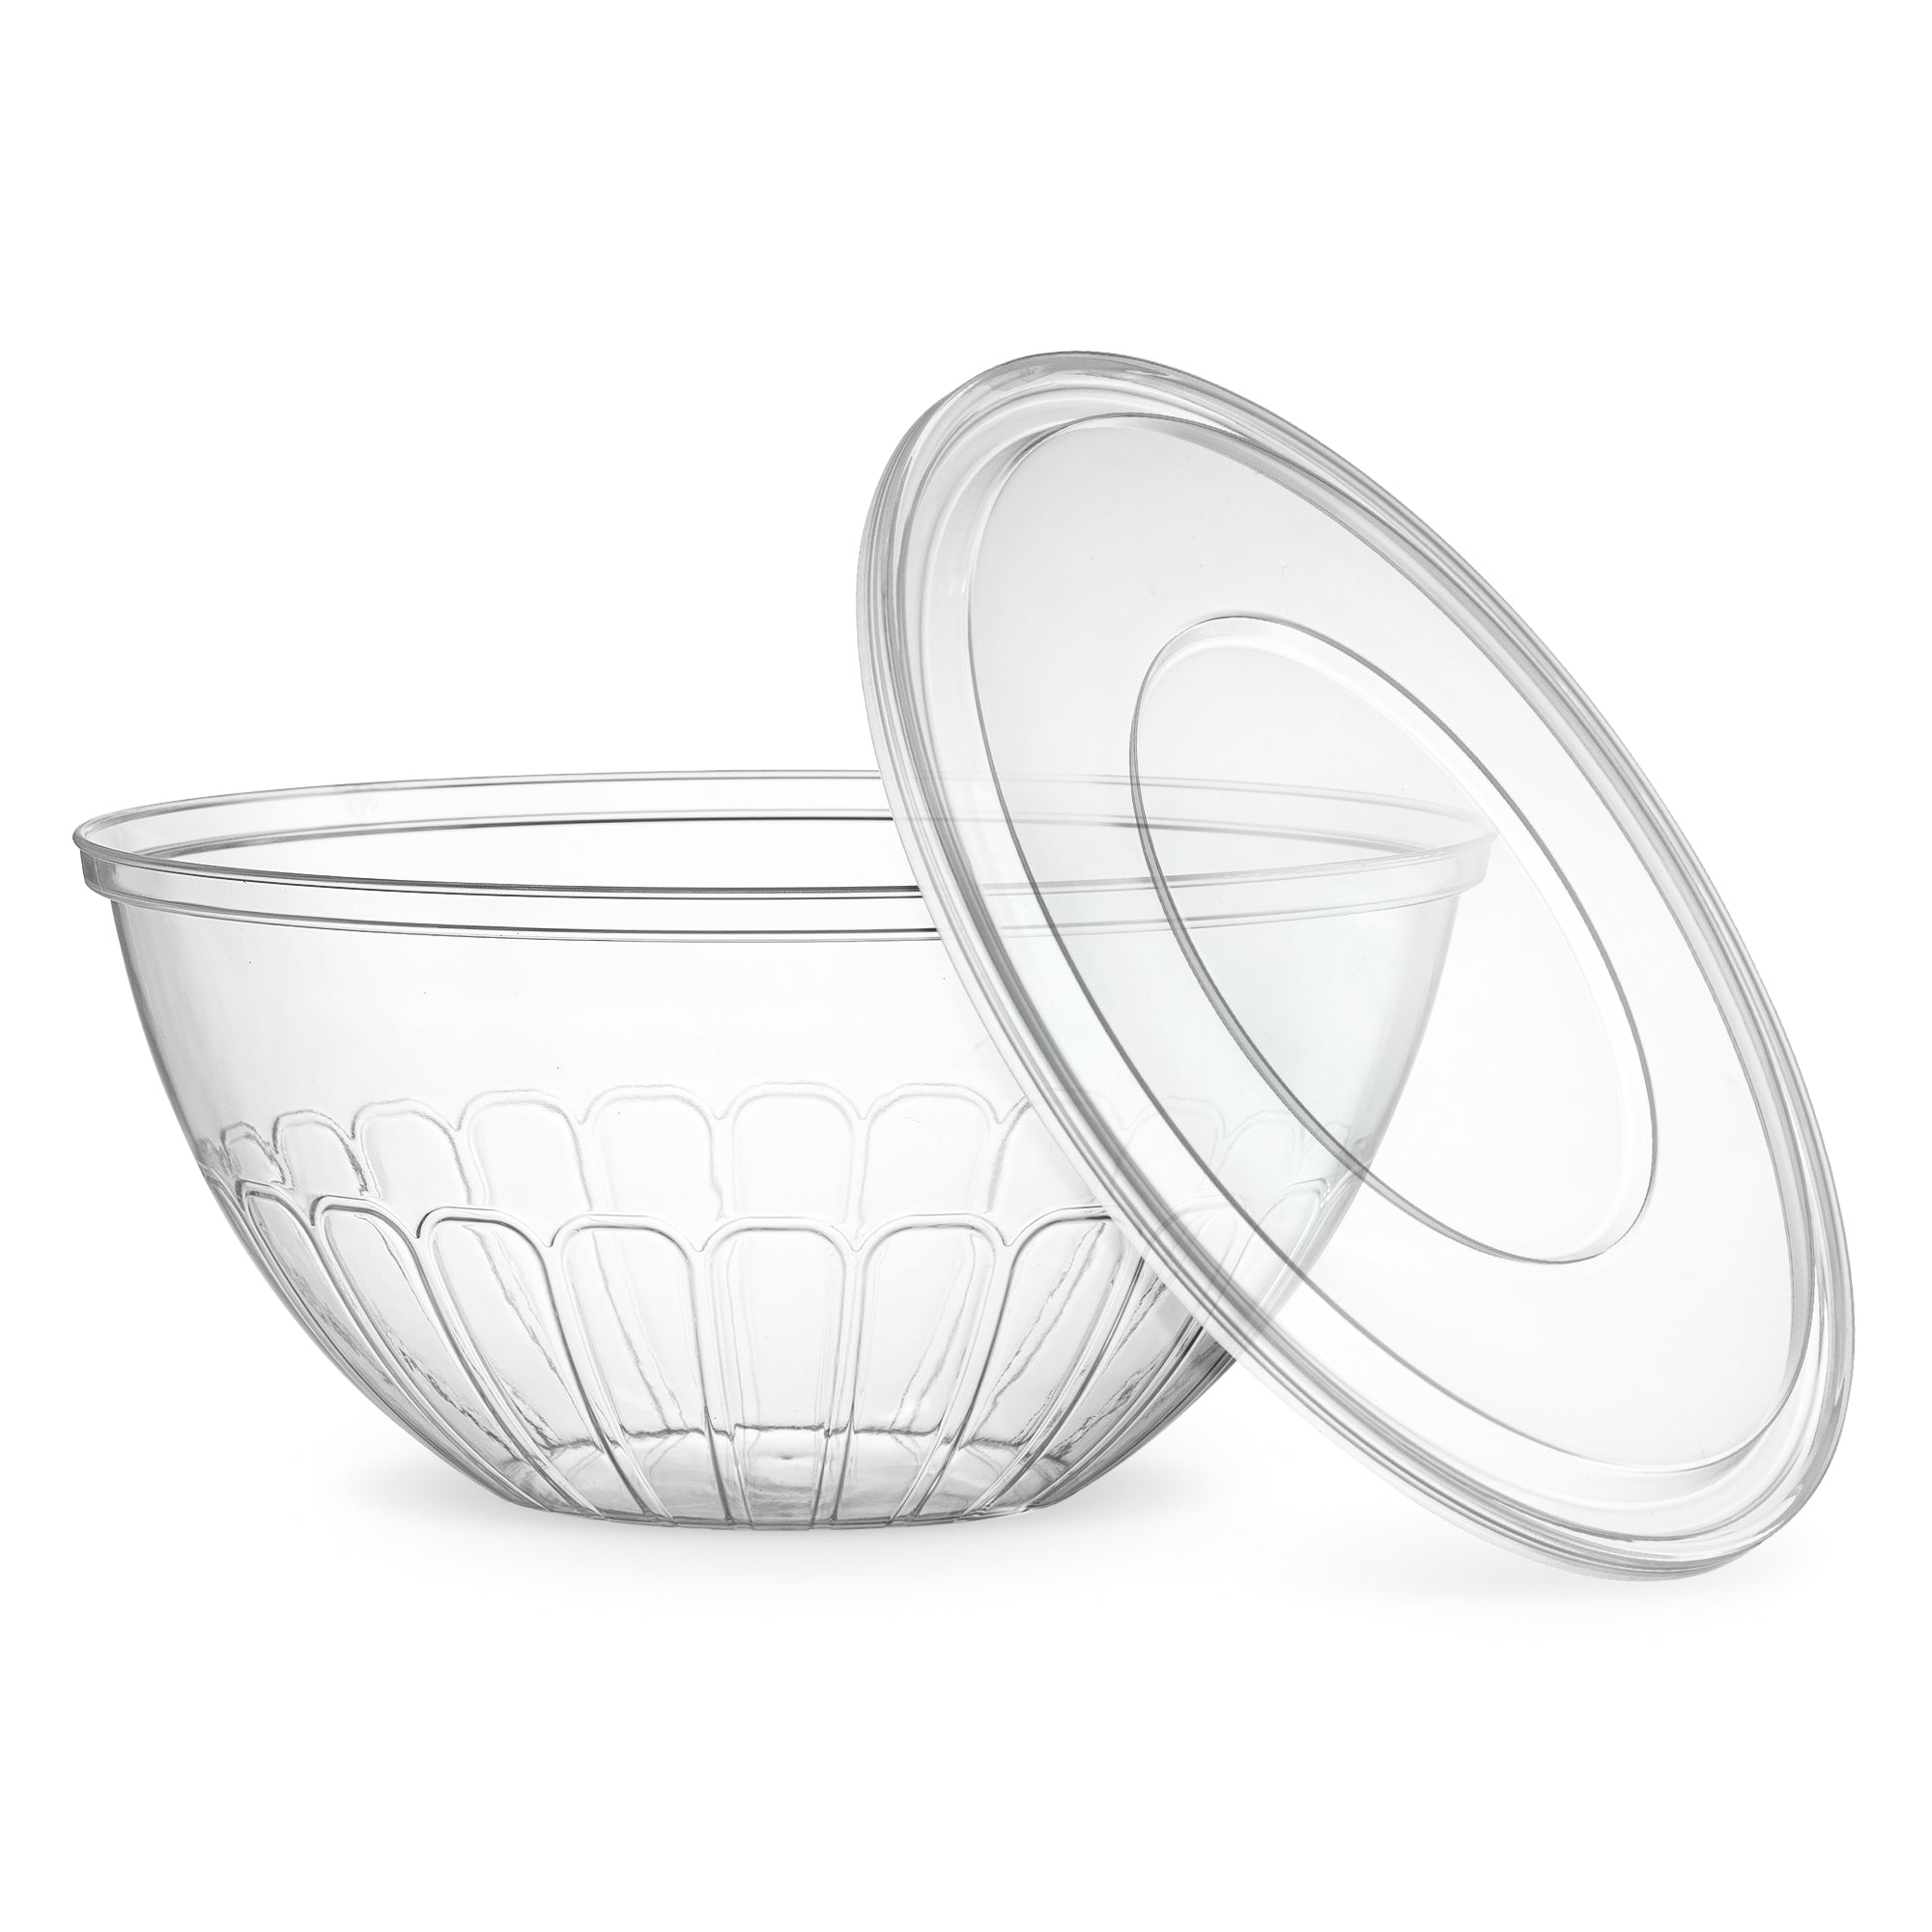 SJKI TRANSPARENT Plastic Salad Bowl With Lid, For Restaurant, Set